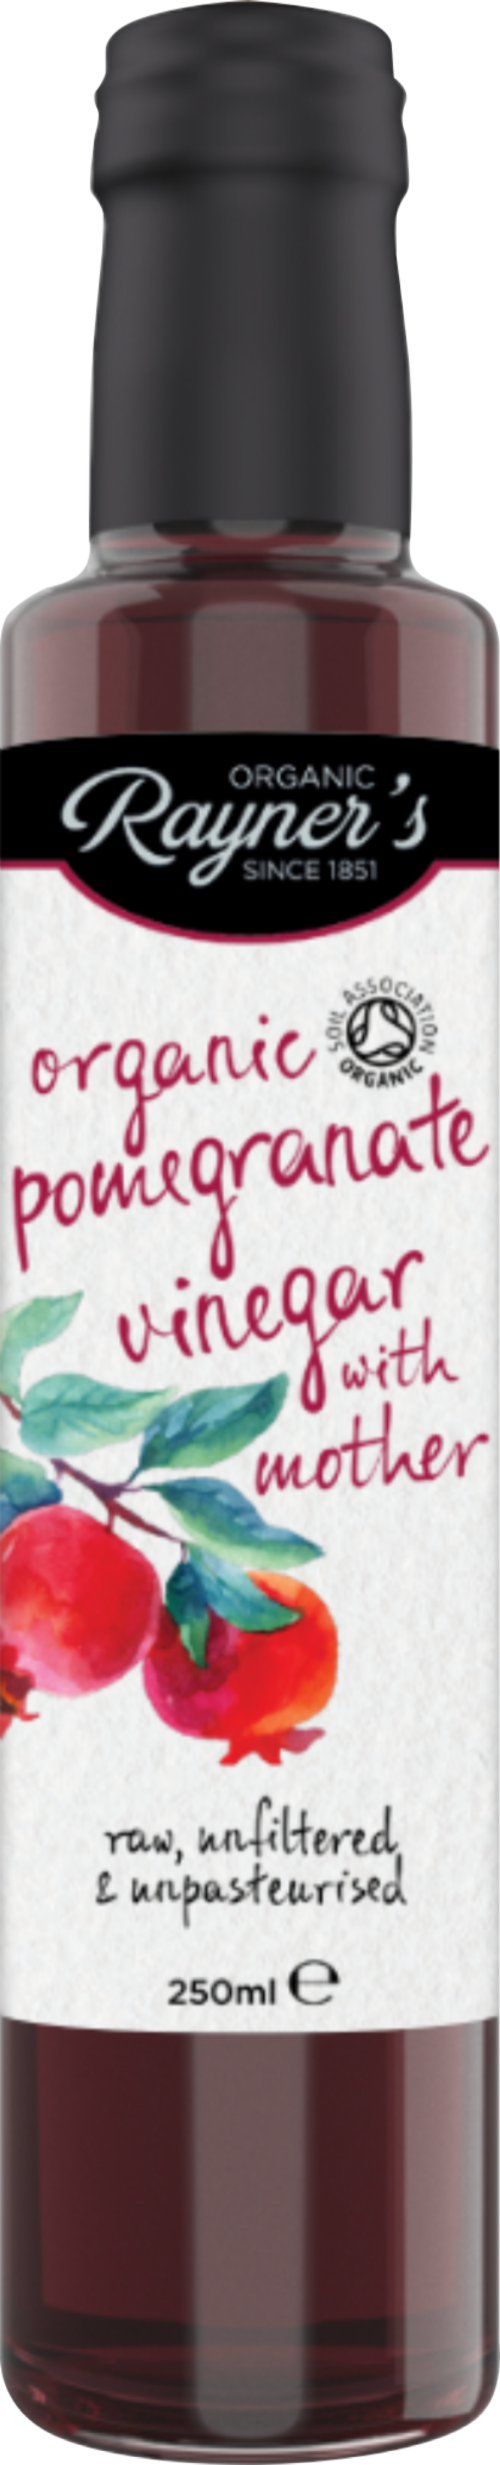 RAYNER'S Organic Pomegranate Vinegar with Mother 250ml